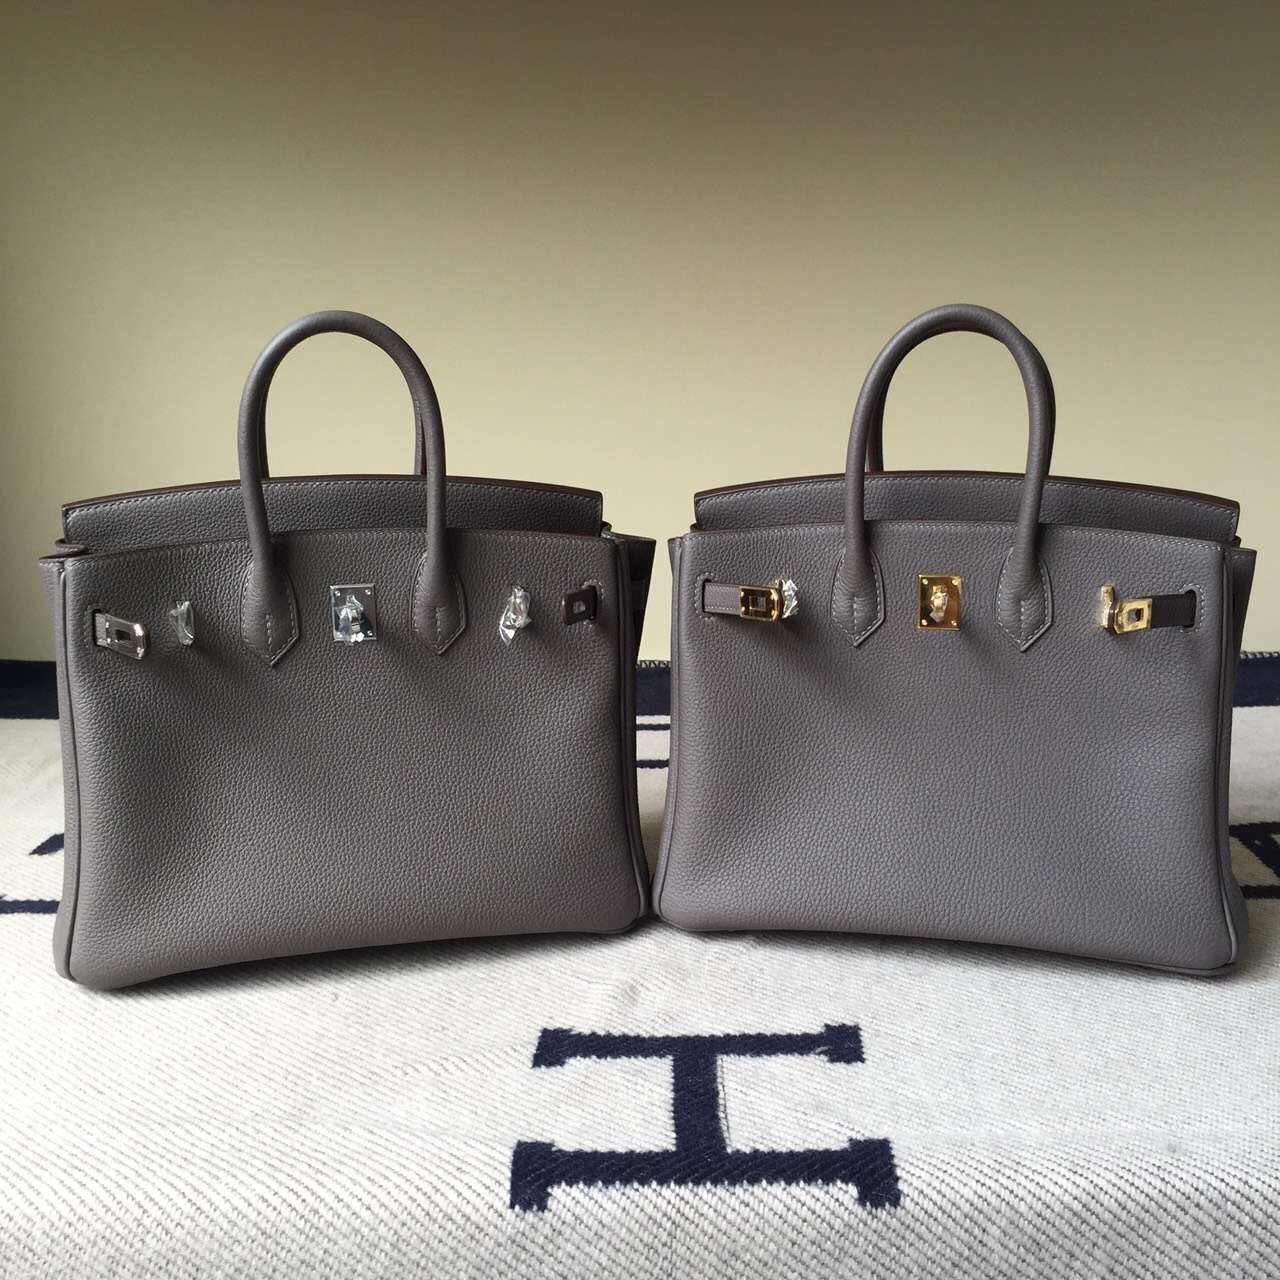 Discount Hermes 8F Etain Grey Togo Calf Leather Birkin Bag 25cm